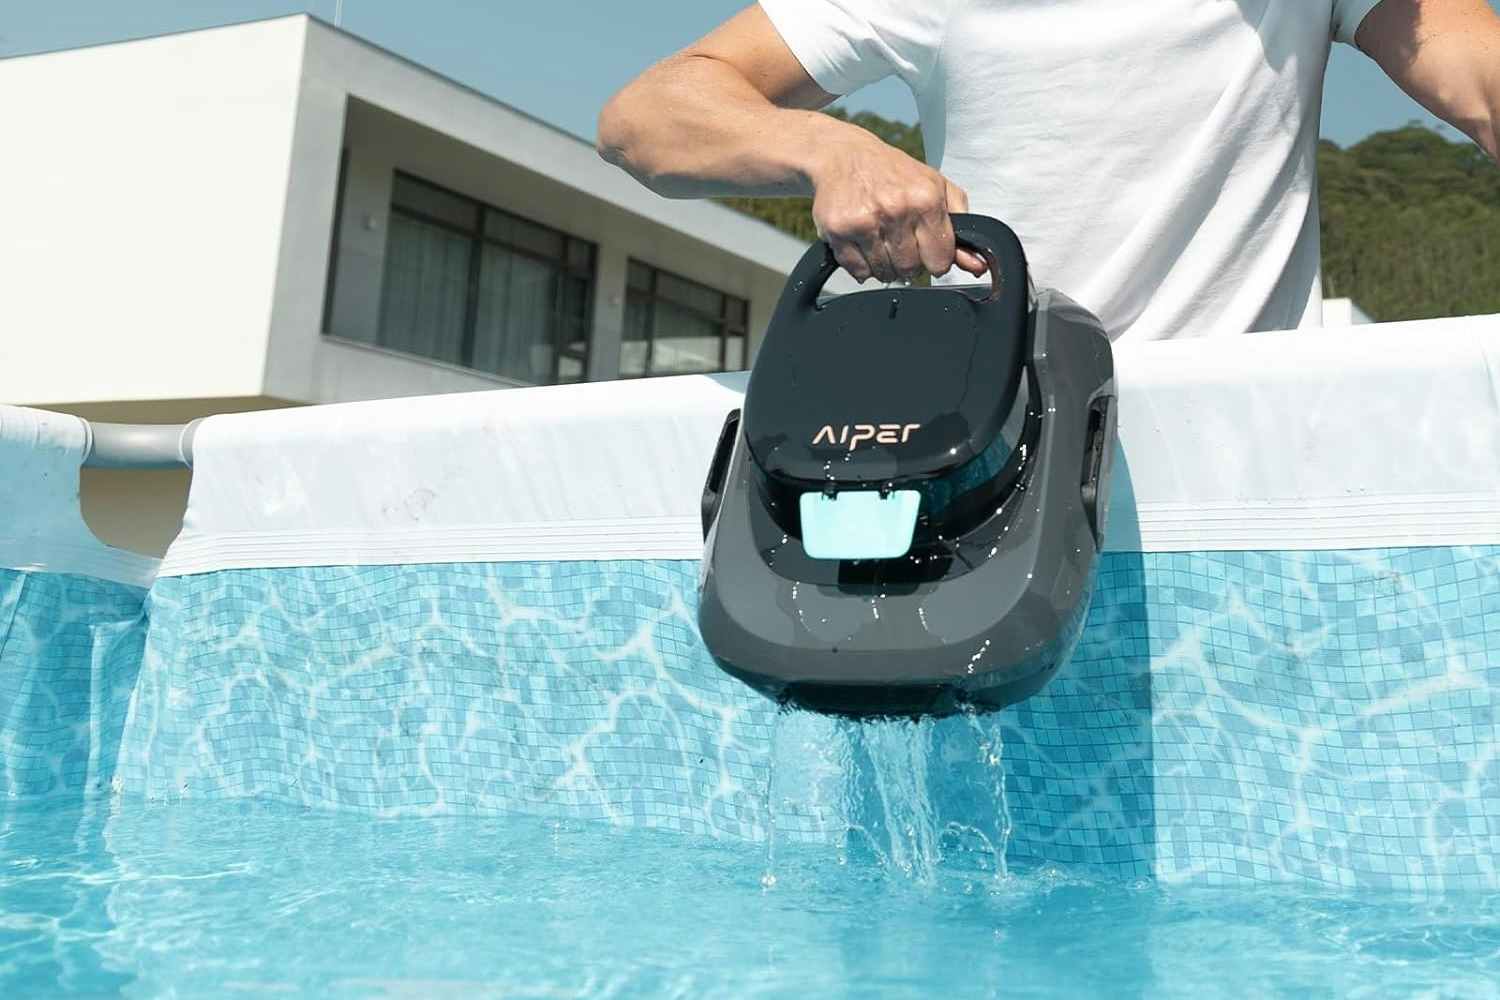 Scuba Robotic Pool Cleaner, $109.99 on Amazon (Reg. $200)